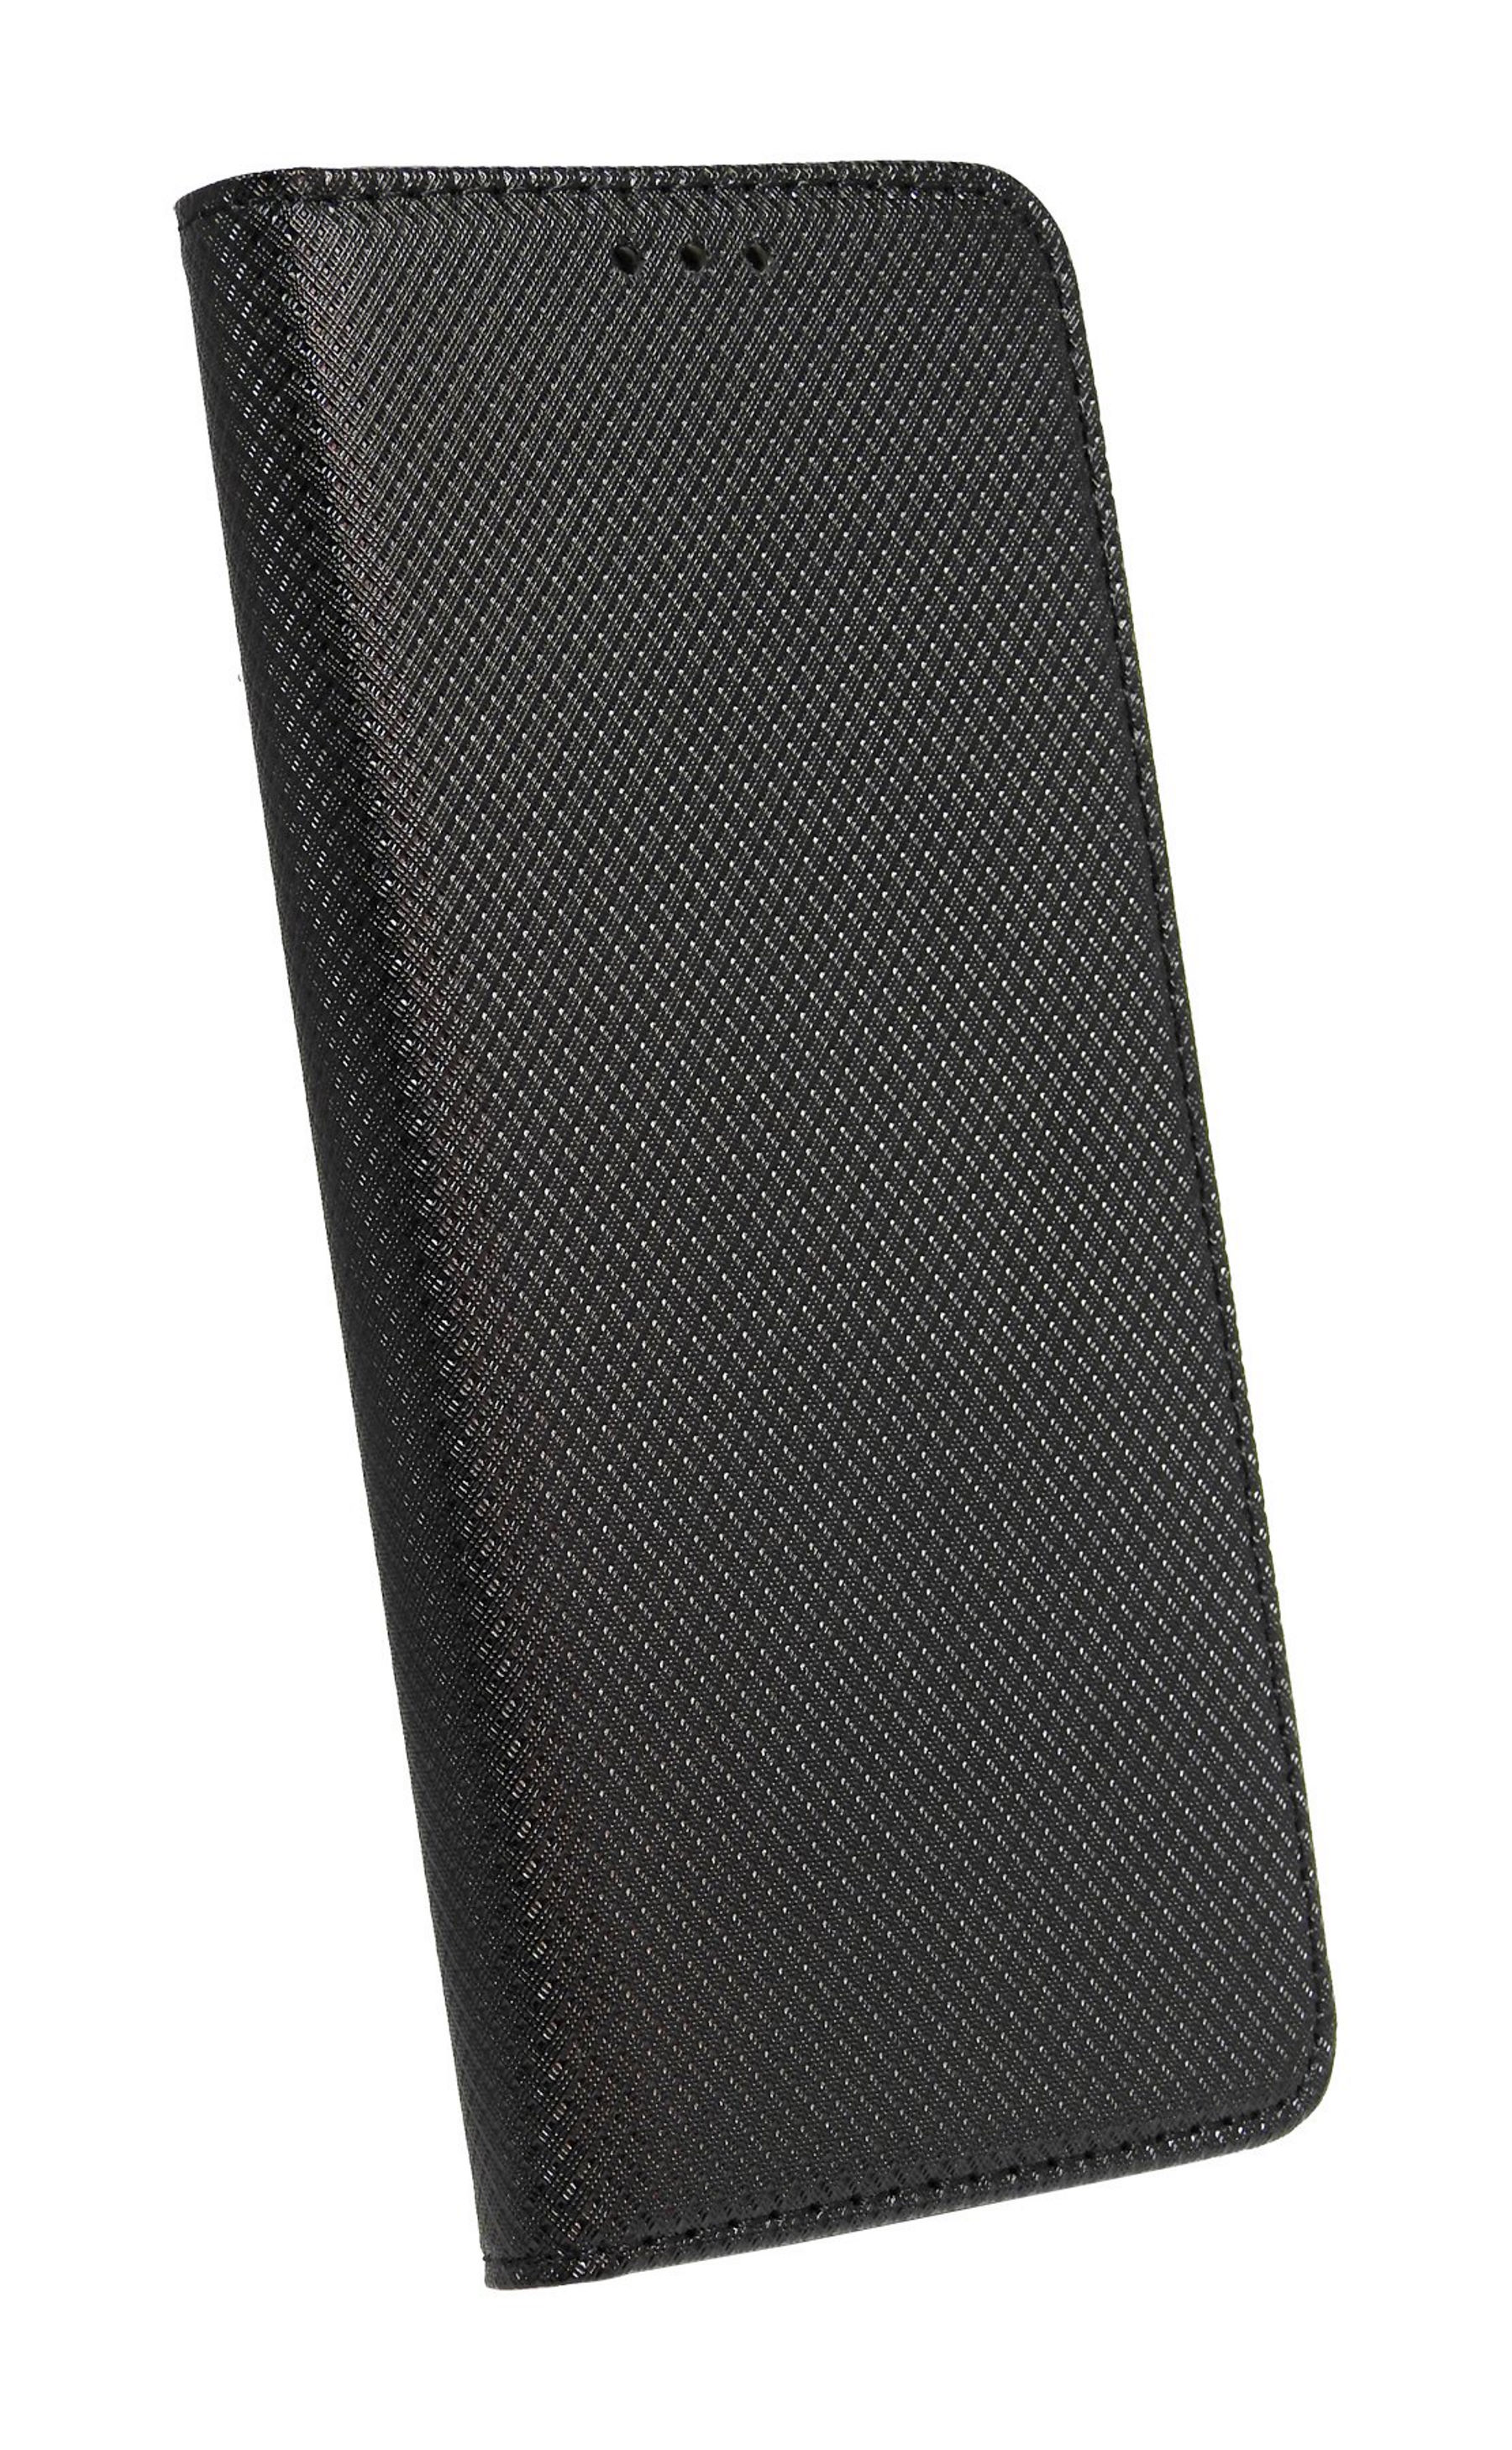 5G, COFI Bookcover, A72 Galaxy Case, Schwarz Samsung, Smart Hülle